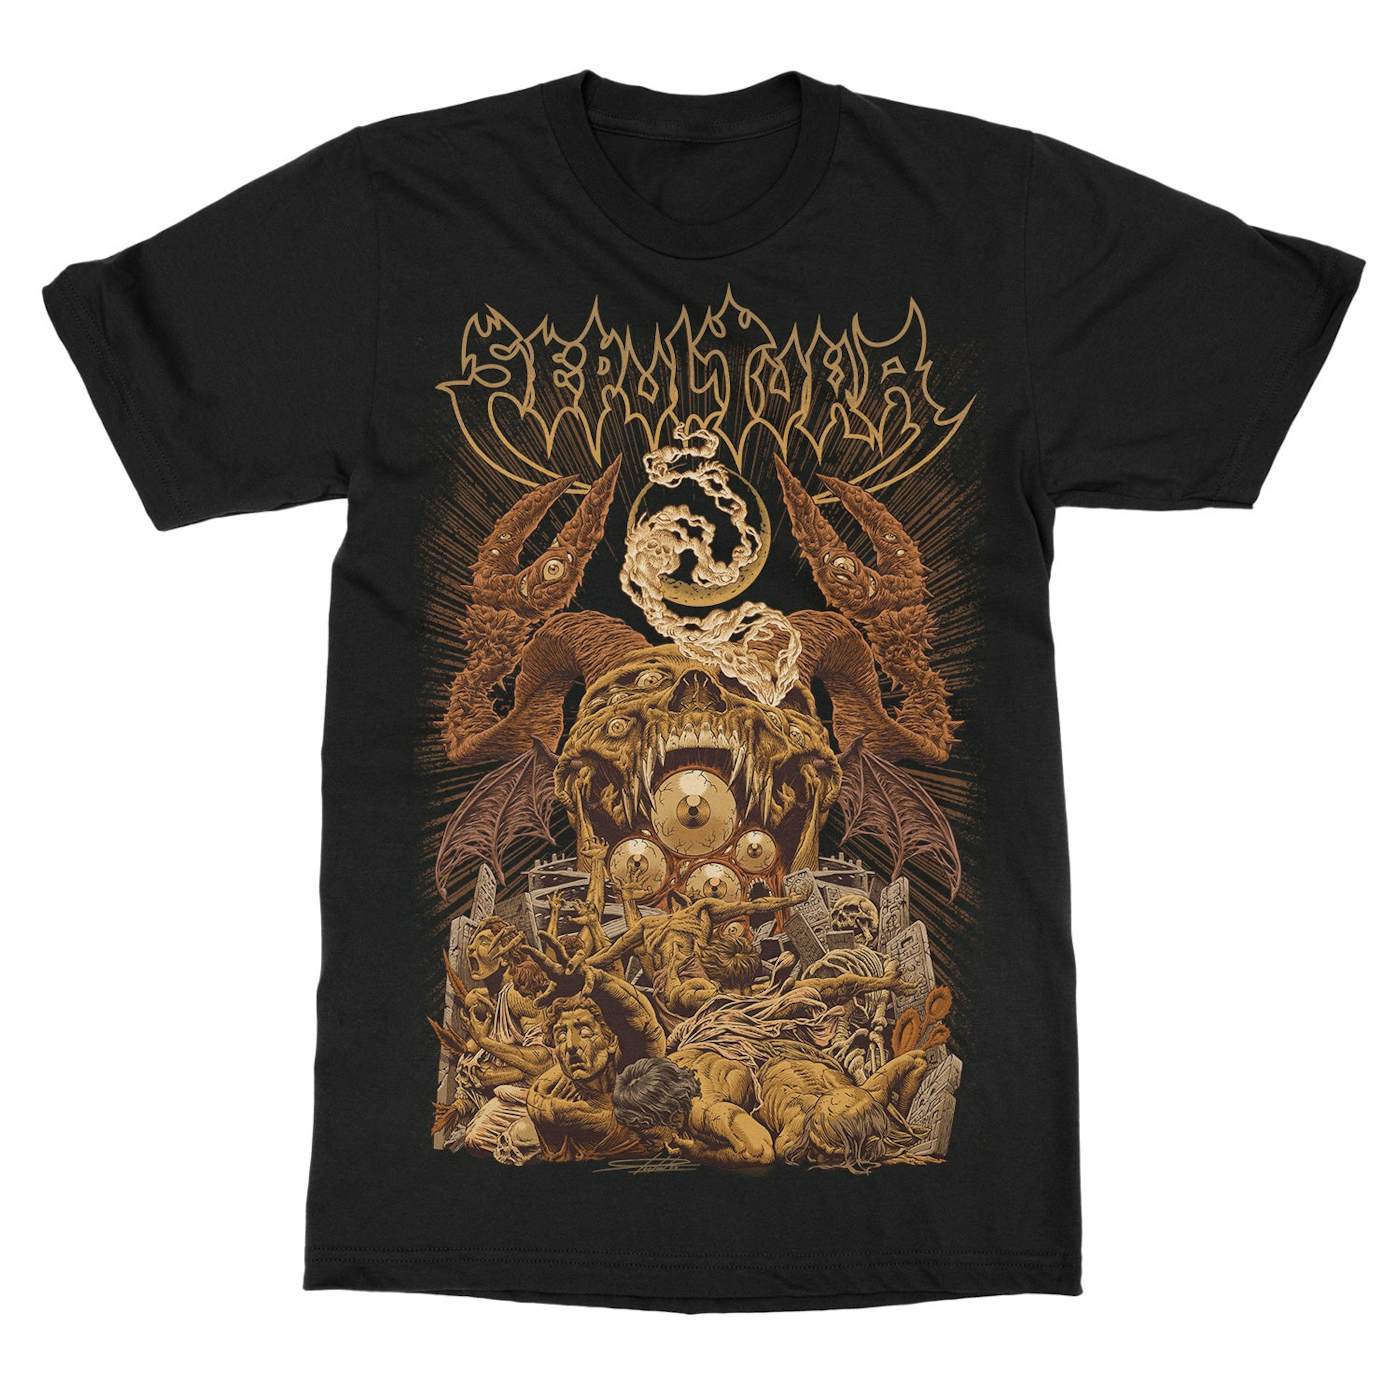 Cavalera Conspiracy Band Fan Shirt 2023 Concert T-Shirt Sweatshirt